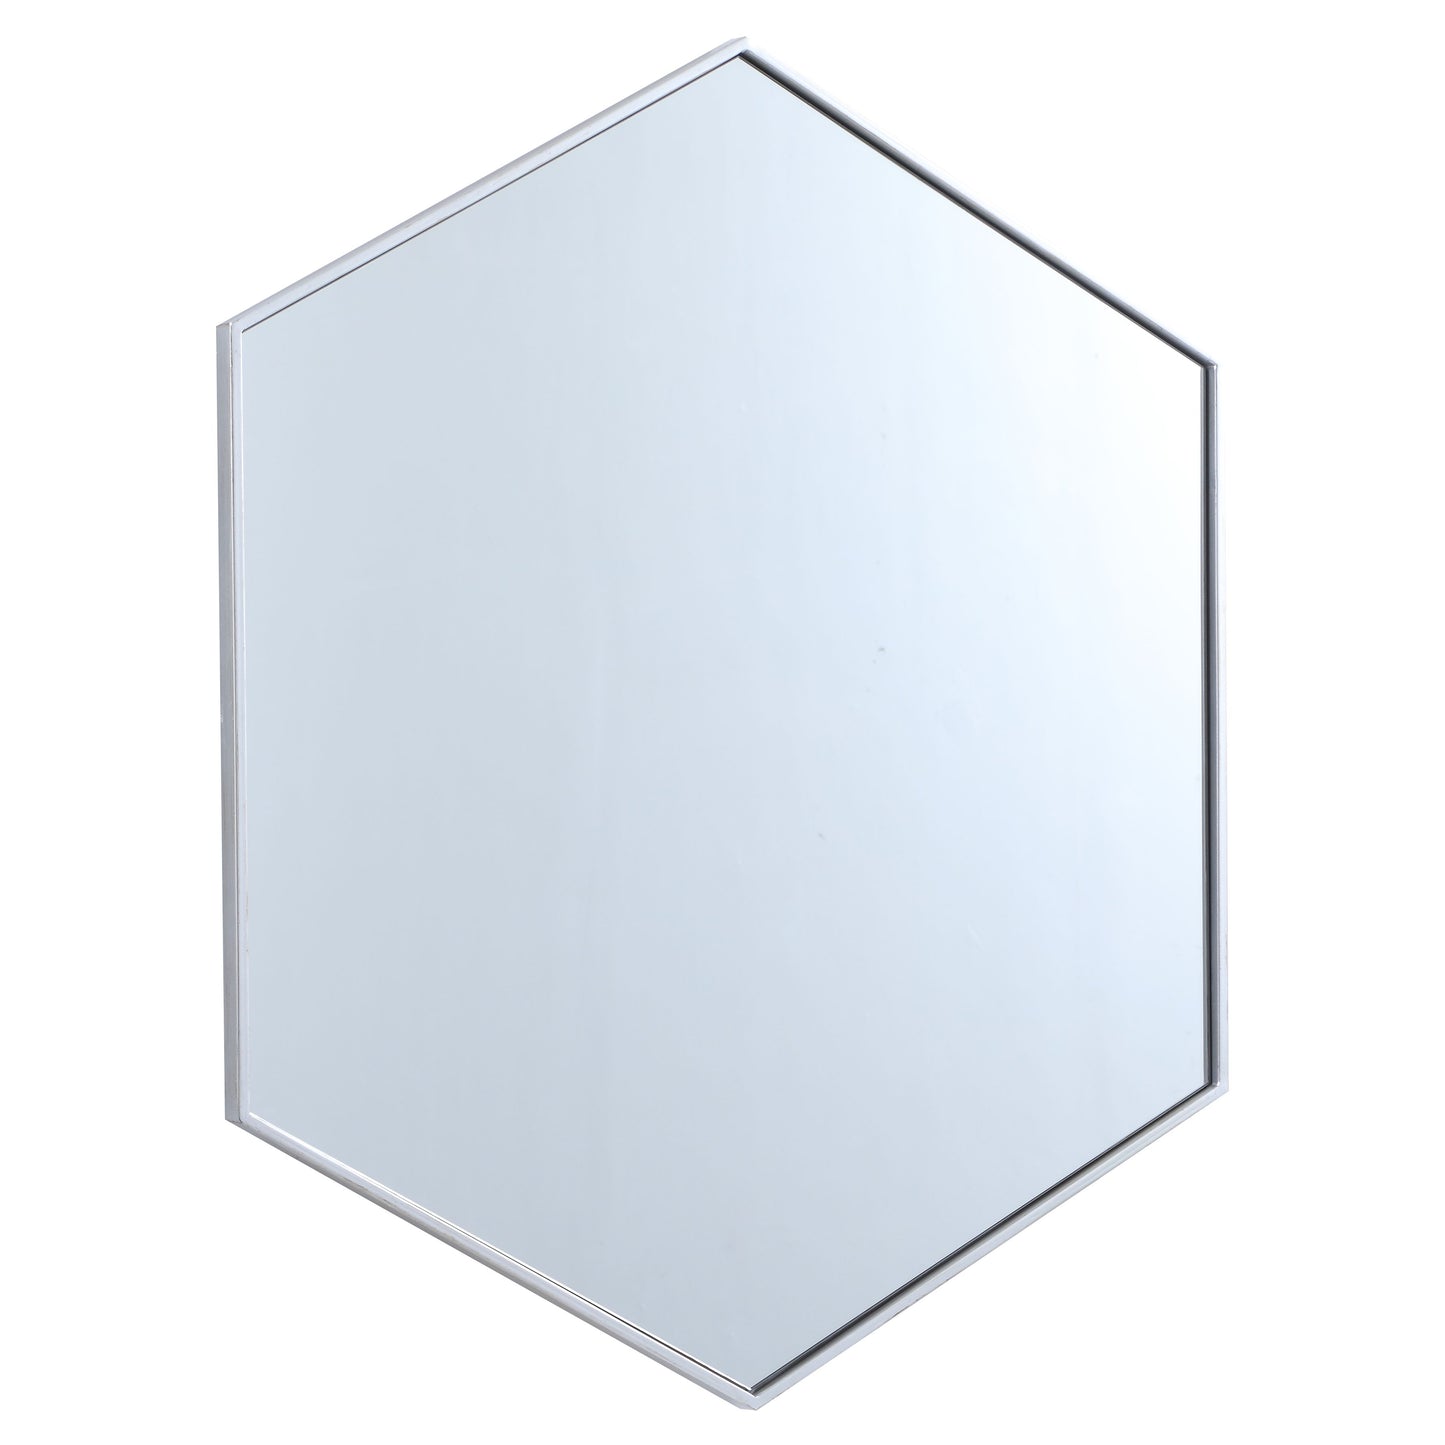 MR4541S Decker 41" x 35" Metal Framed Hexagon Mirror in Silver